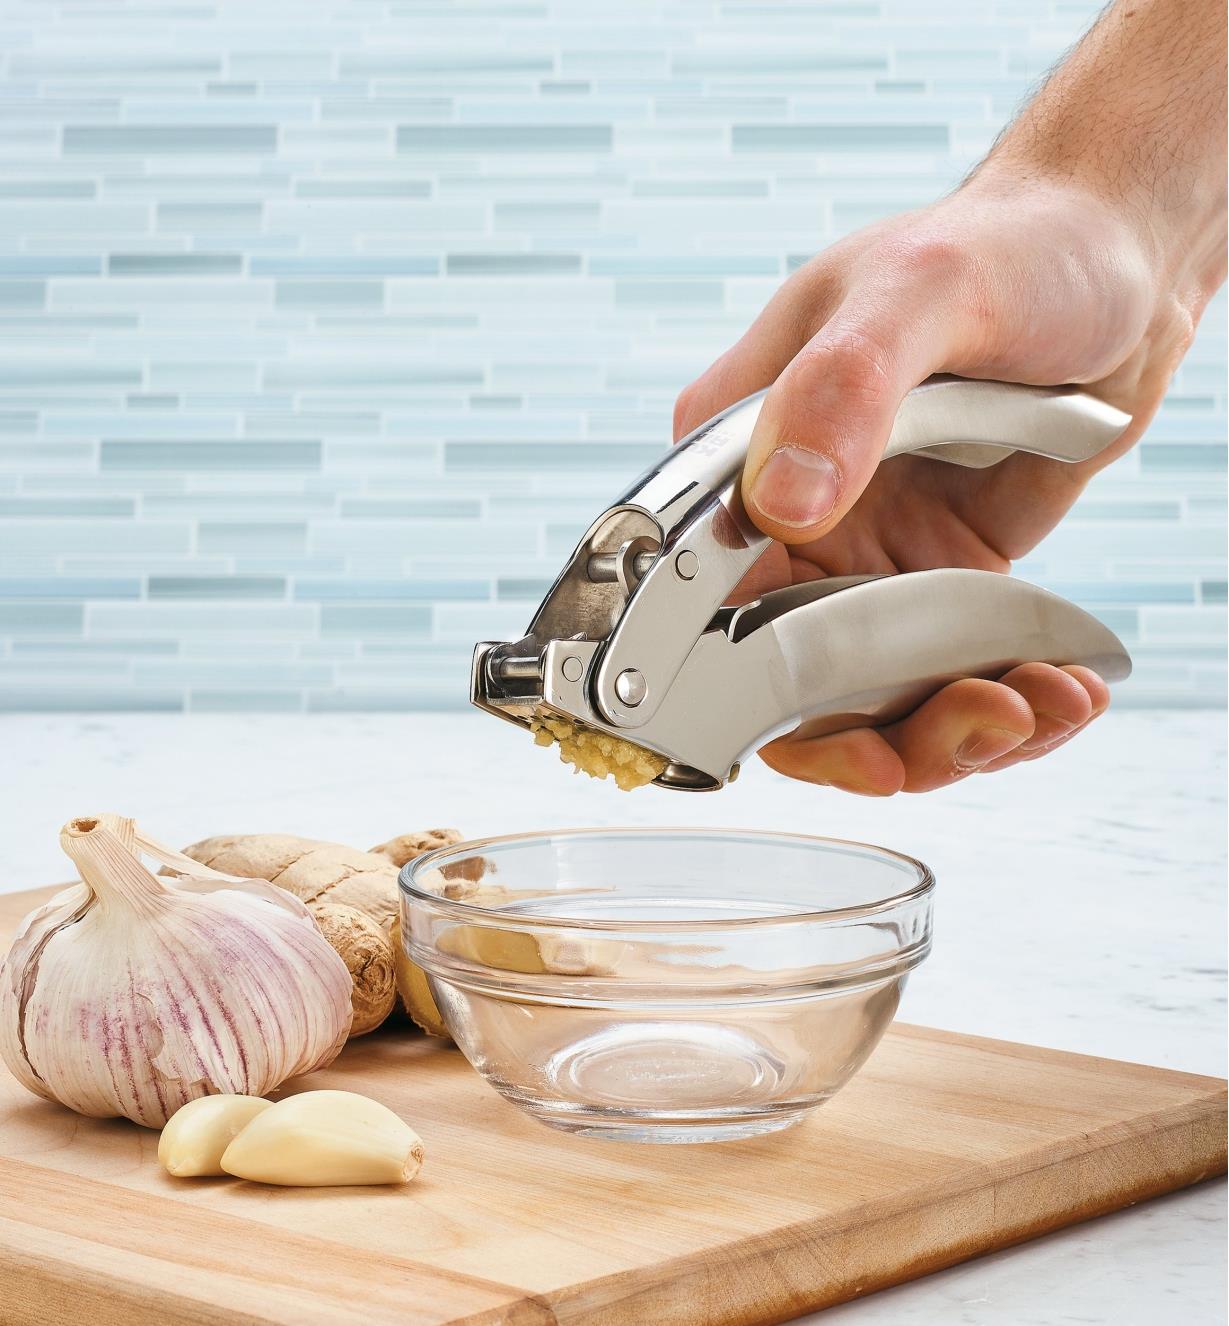 Using the garlic press to mince garlic into a bowl